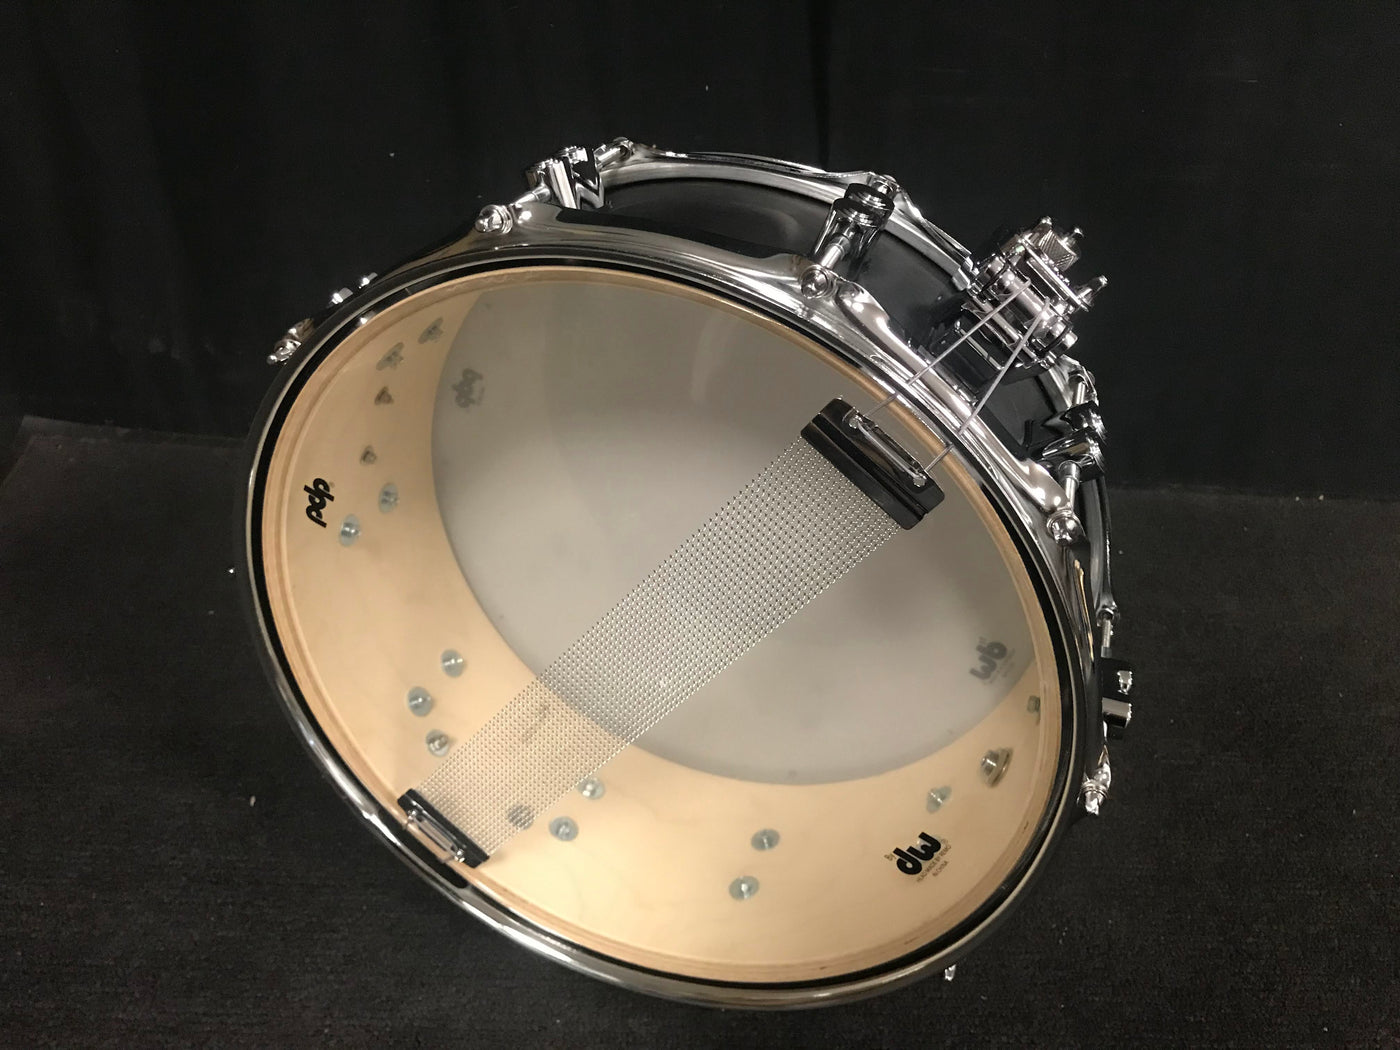 Concept Black Wax Snare Drum